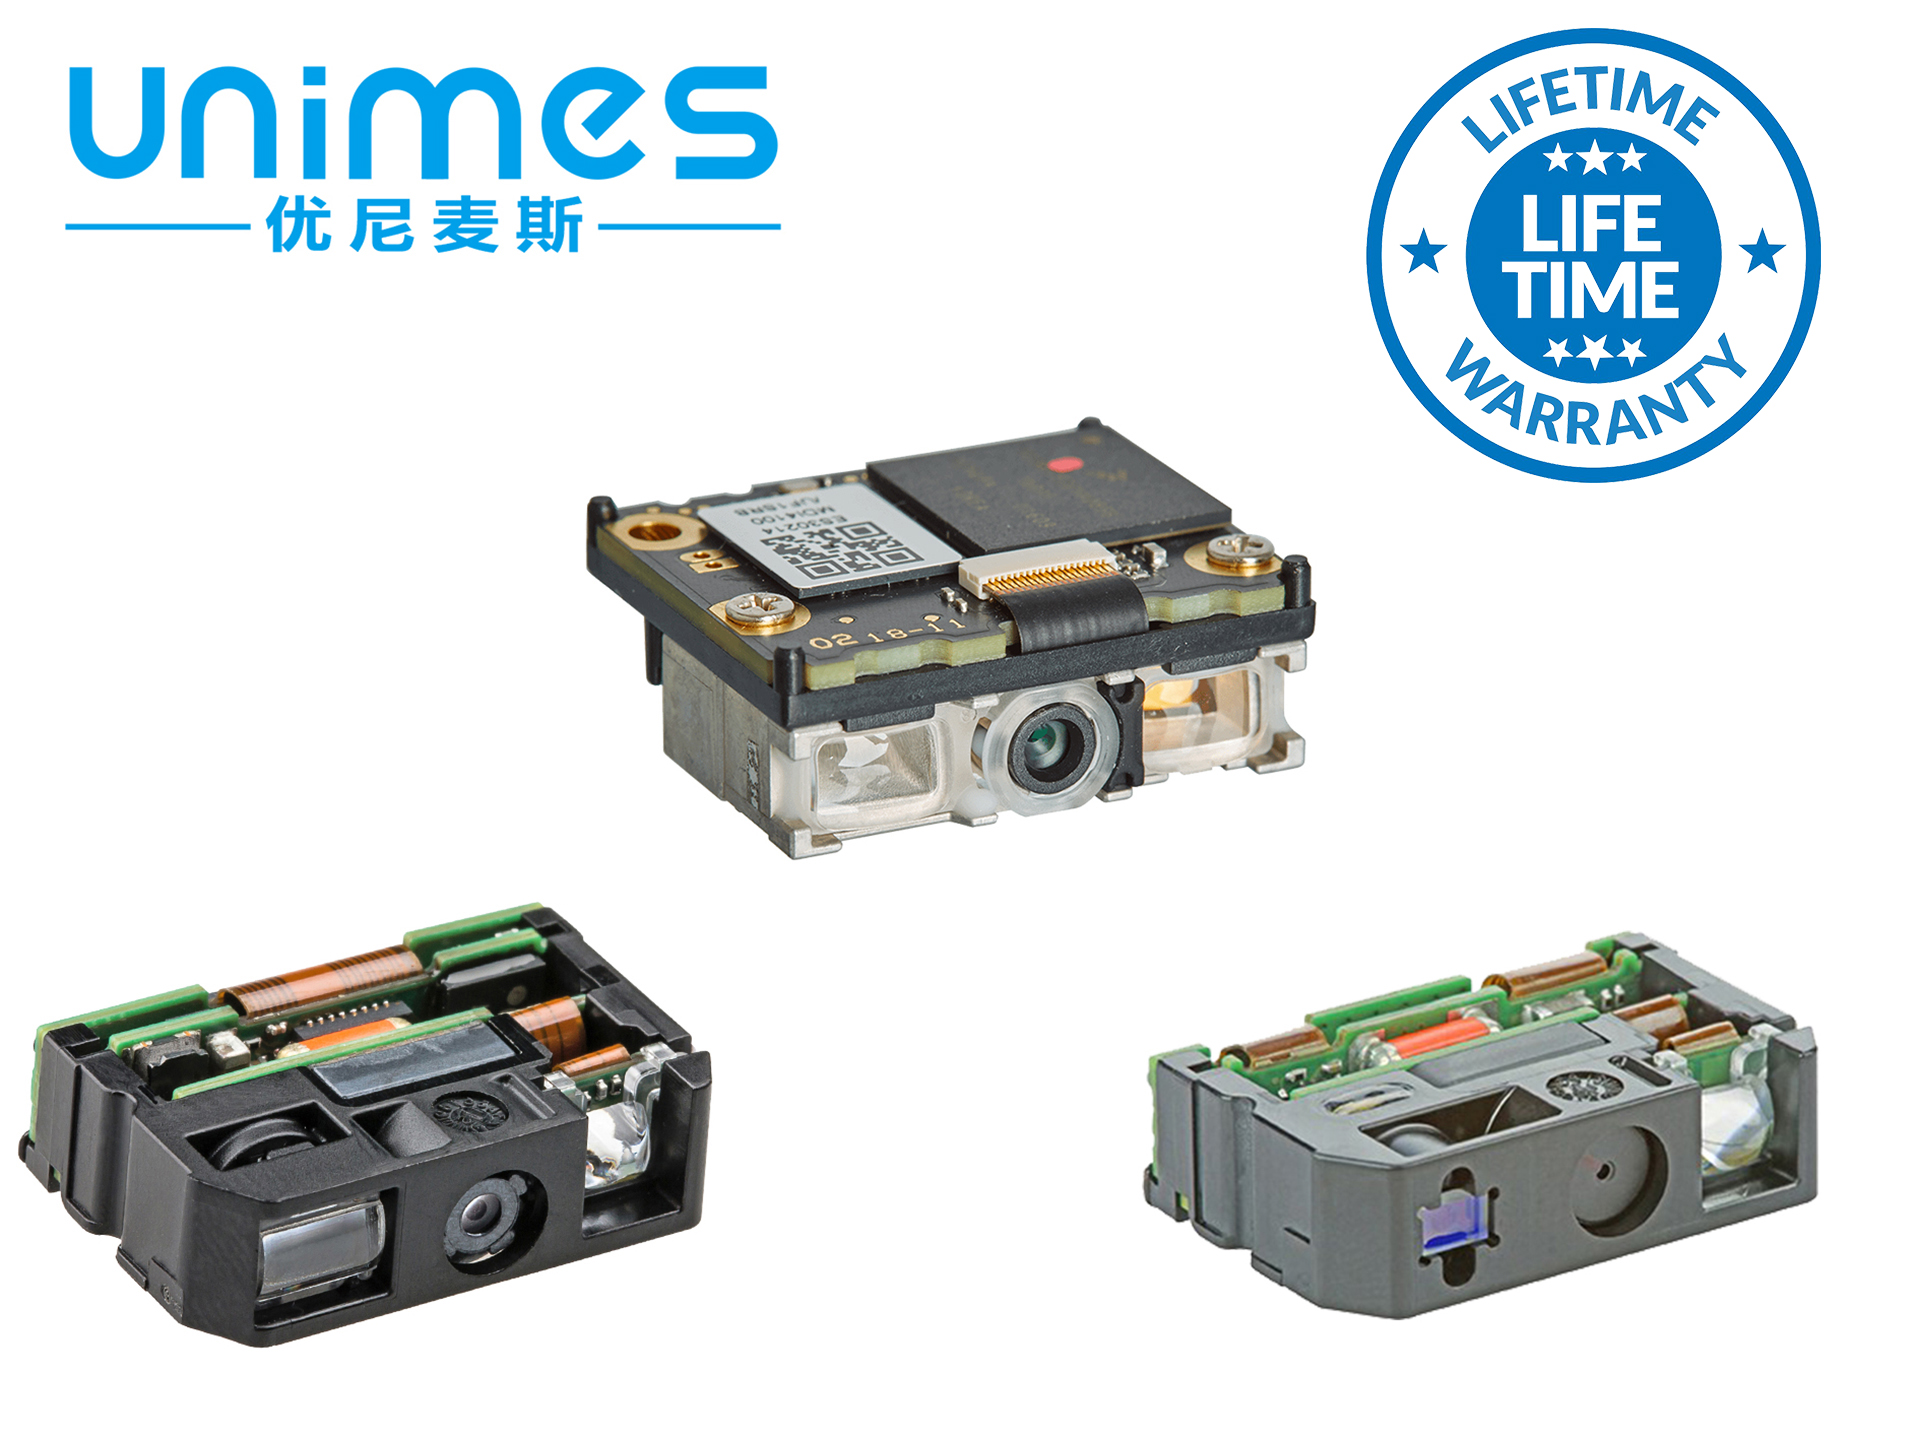 Unimes releases scan engine lifetime warranty